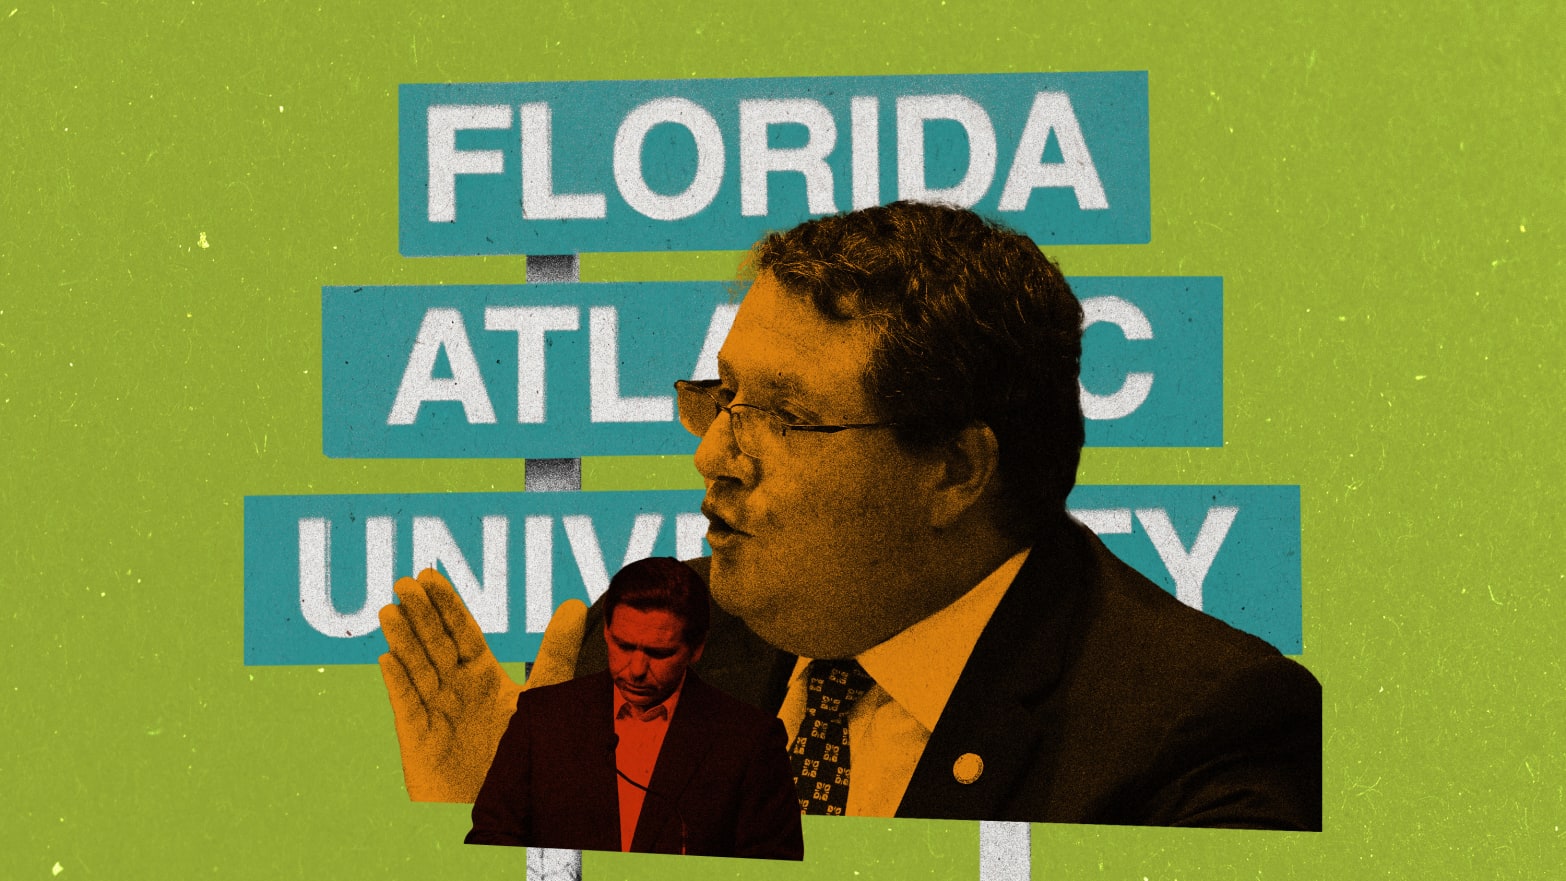 An image of Florida Atlantic University sign